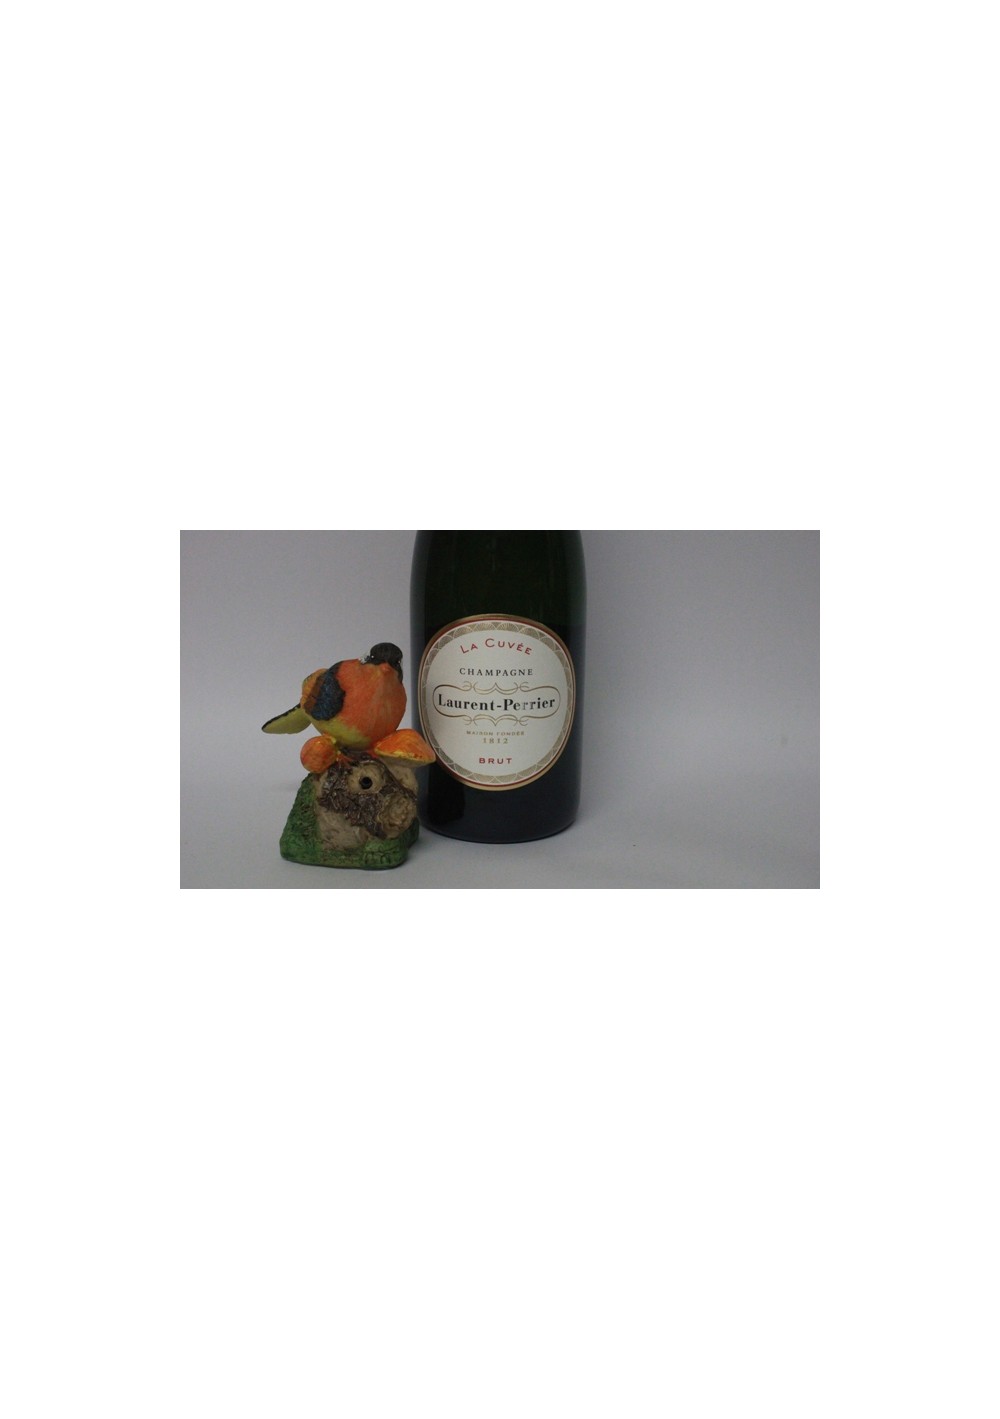 12 liters - Champagne Laurent Perrier Brut - Balthazar